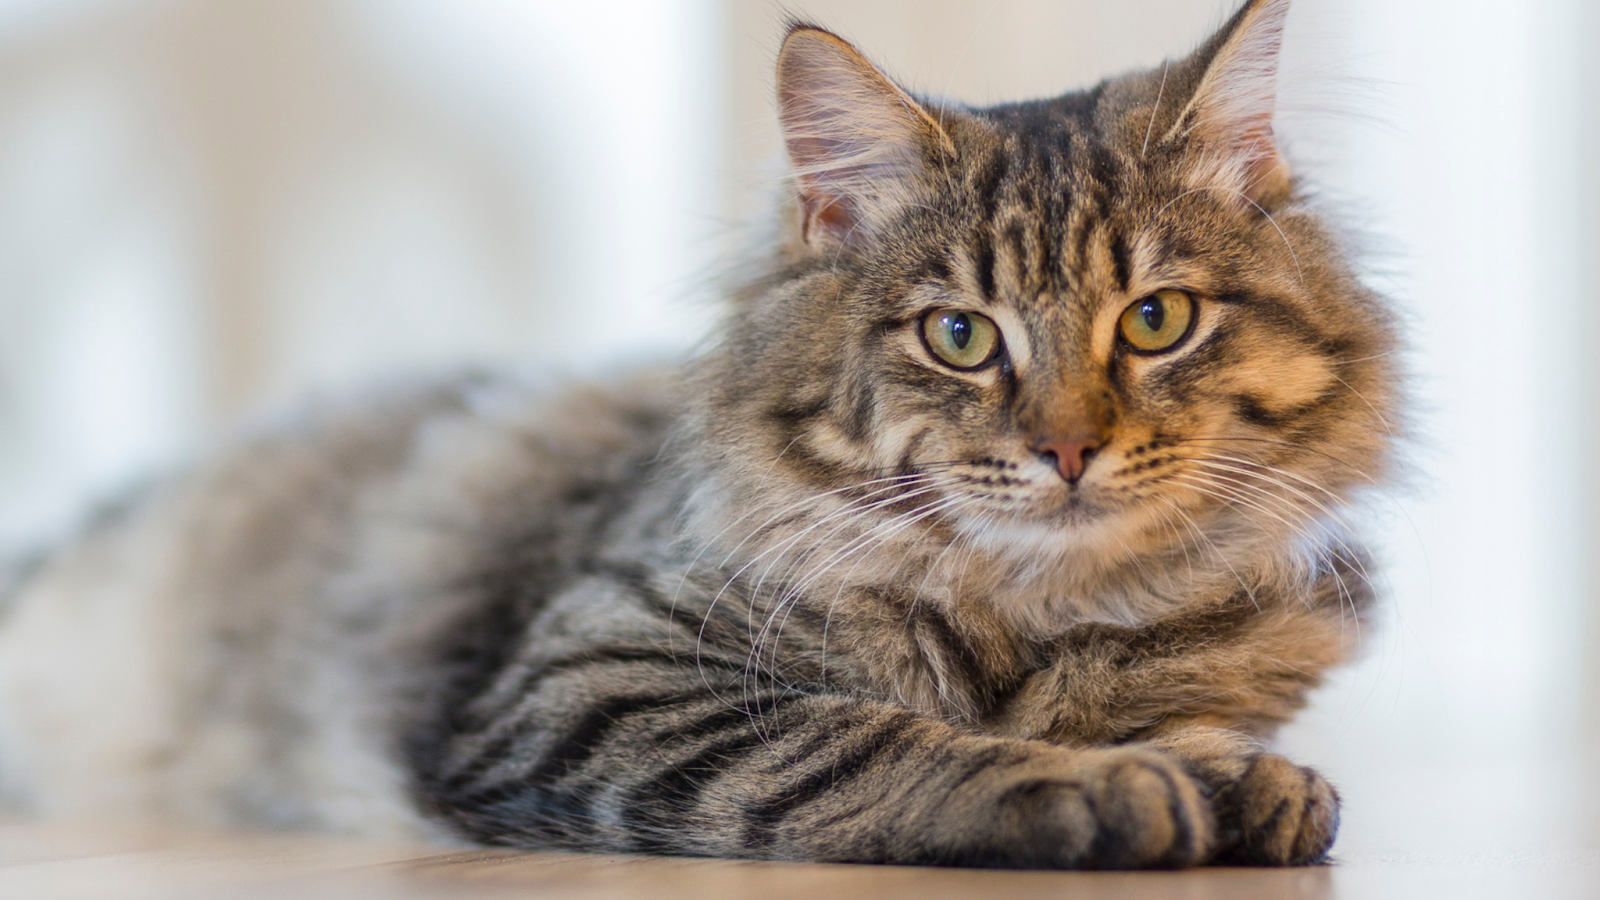 Non-core vaccines for cats include Feline Leukemia Virus (FeLV) and Feline Immunodeficiency Virus (FIV).